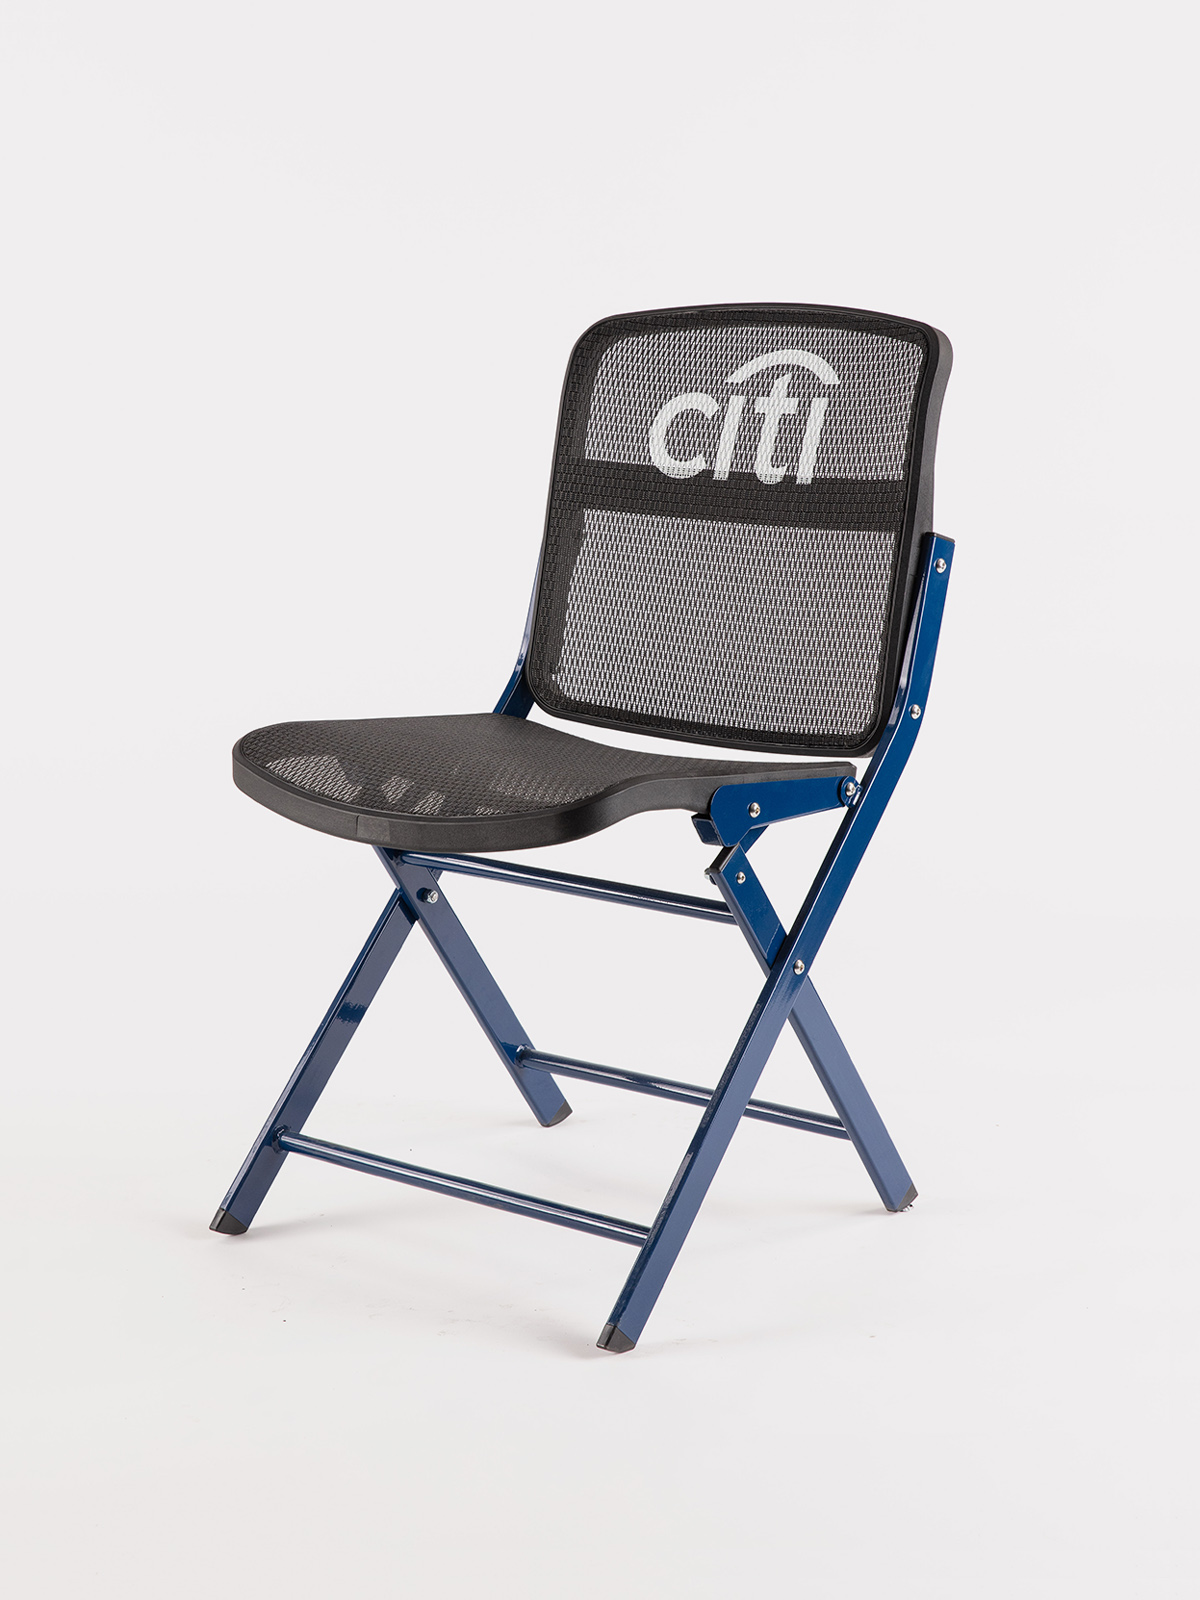 CTI Logo on mesh 4 Topps folding seat on white background